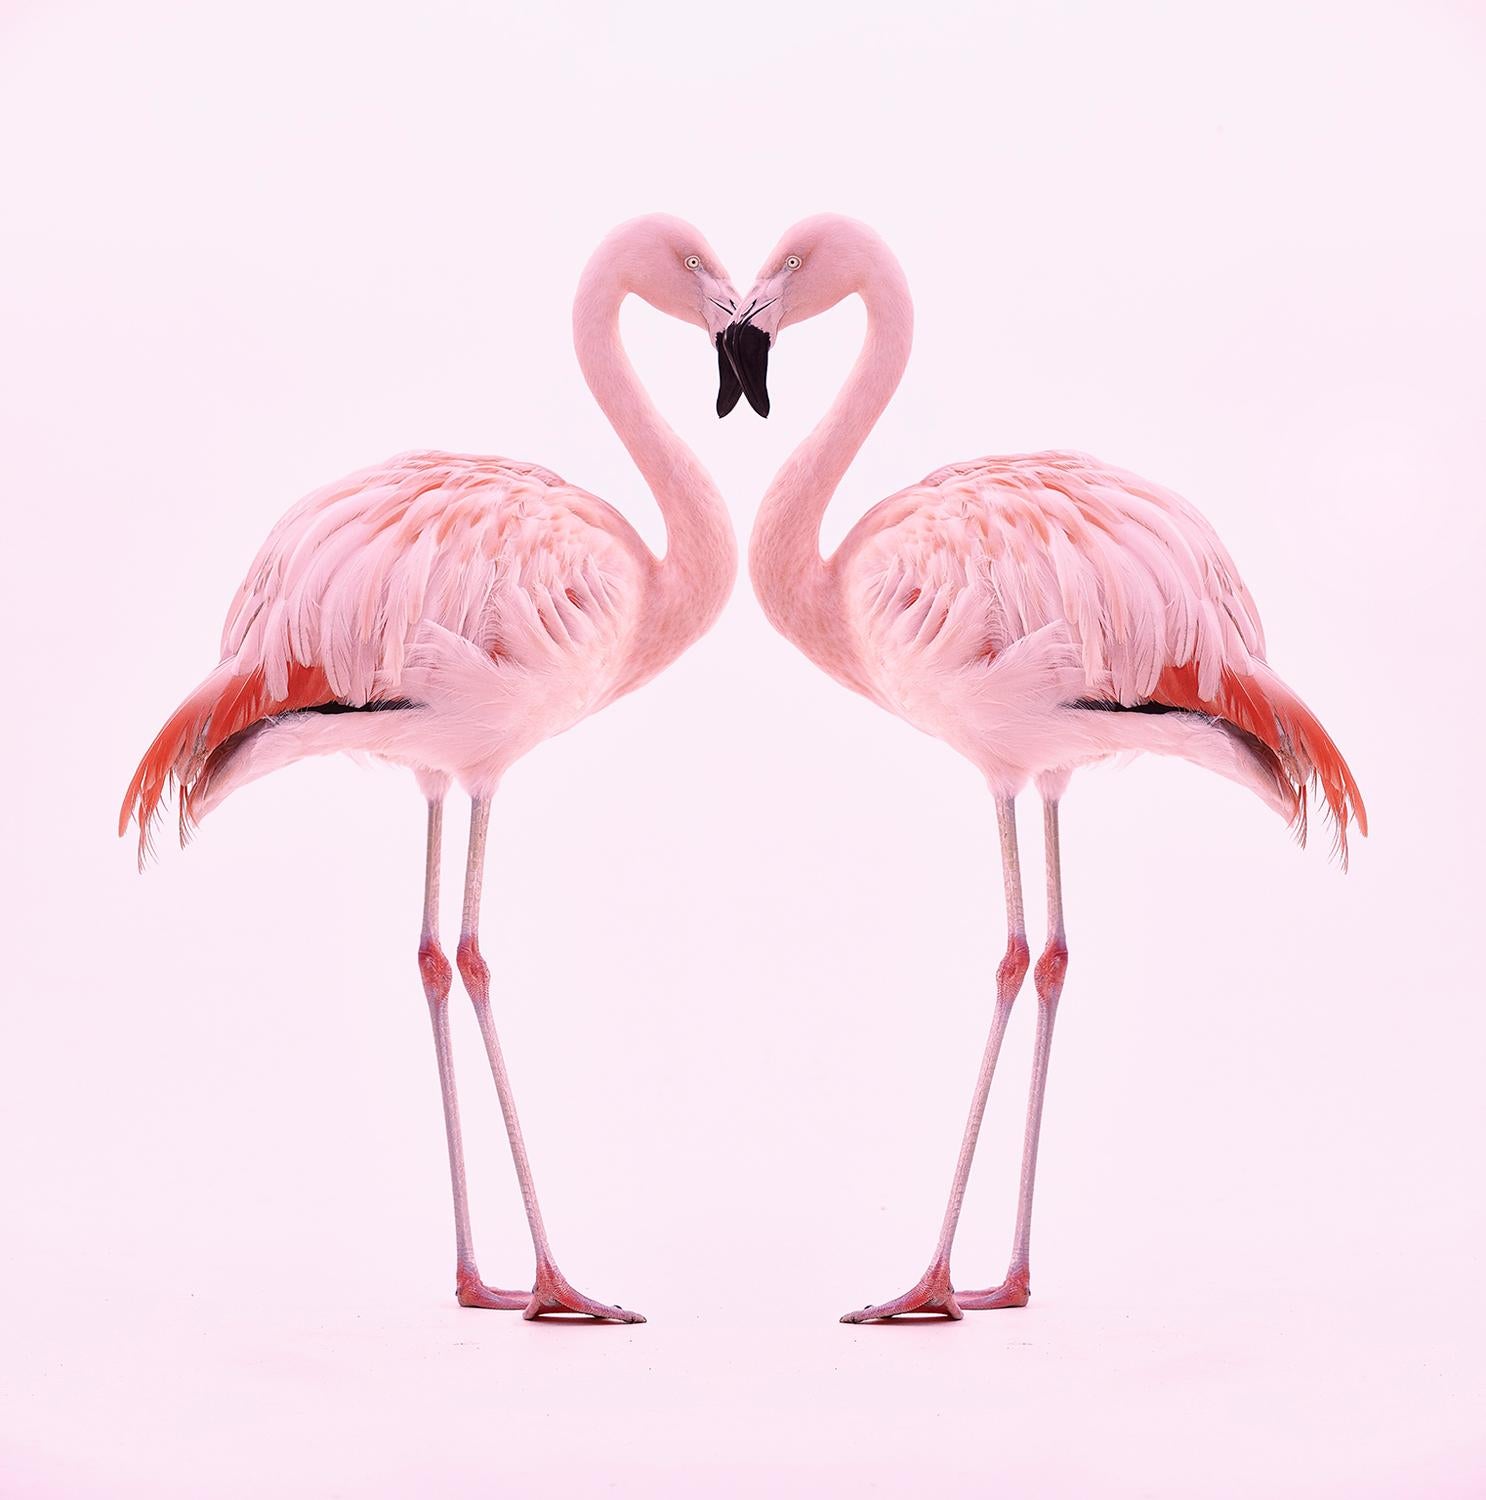 Flamingo No. 2 - Photograph by Chris Gordaneer